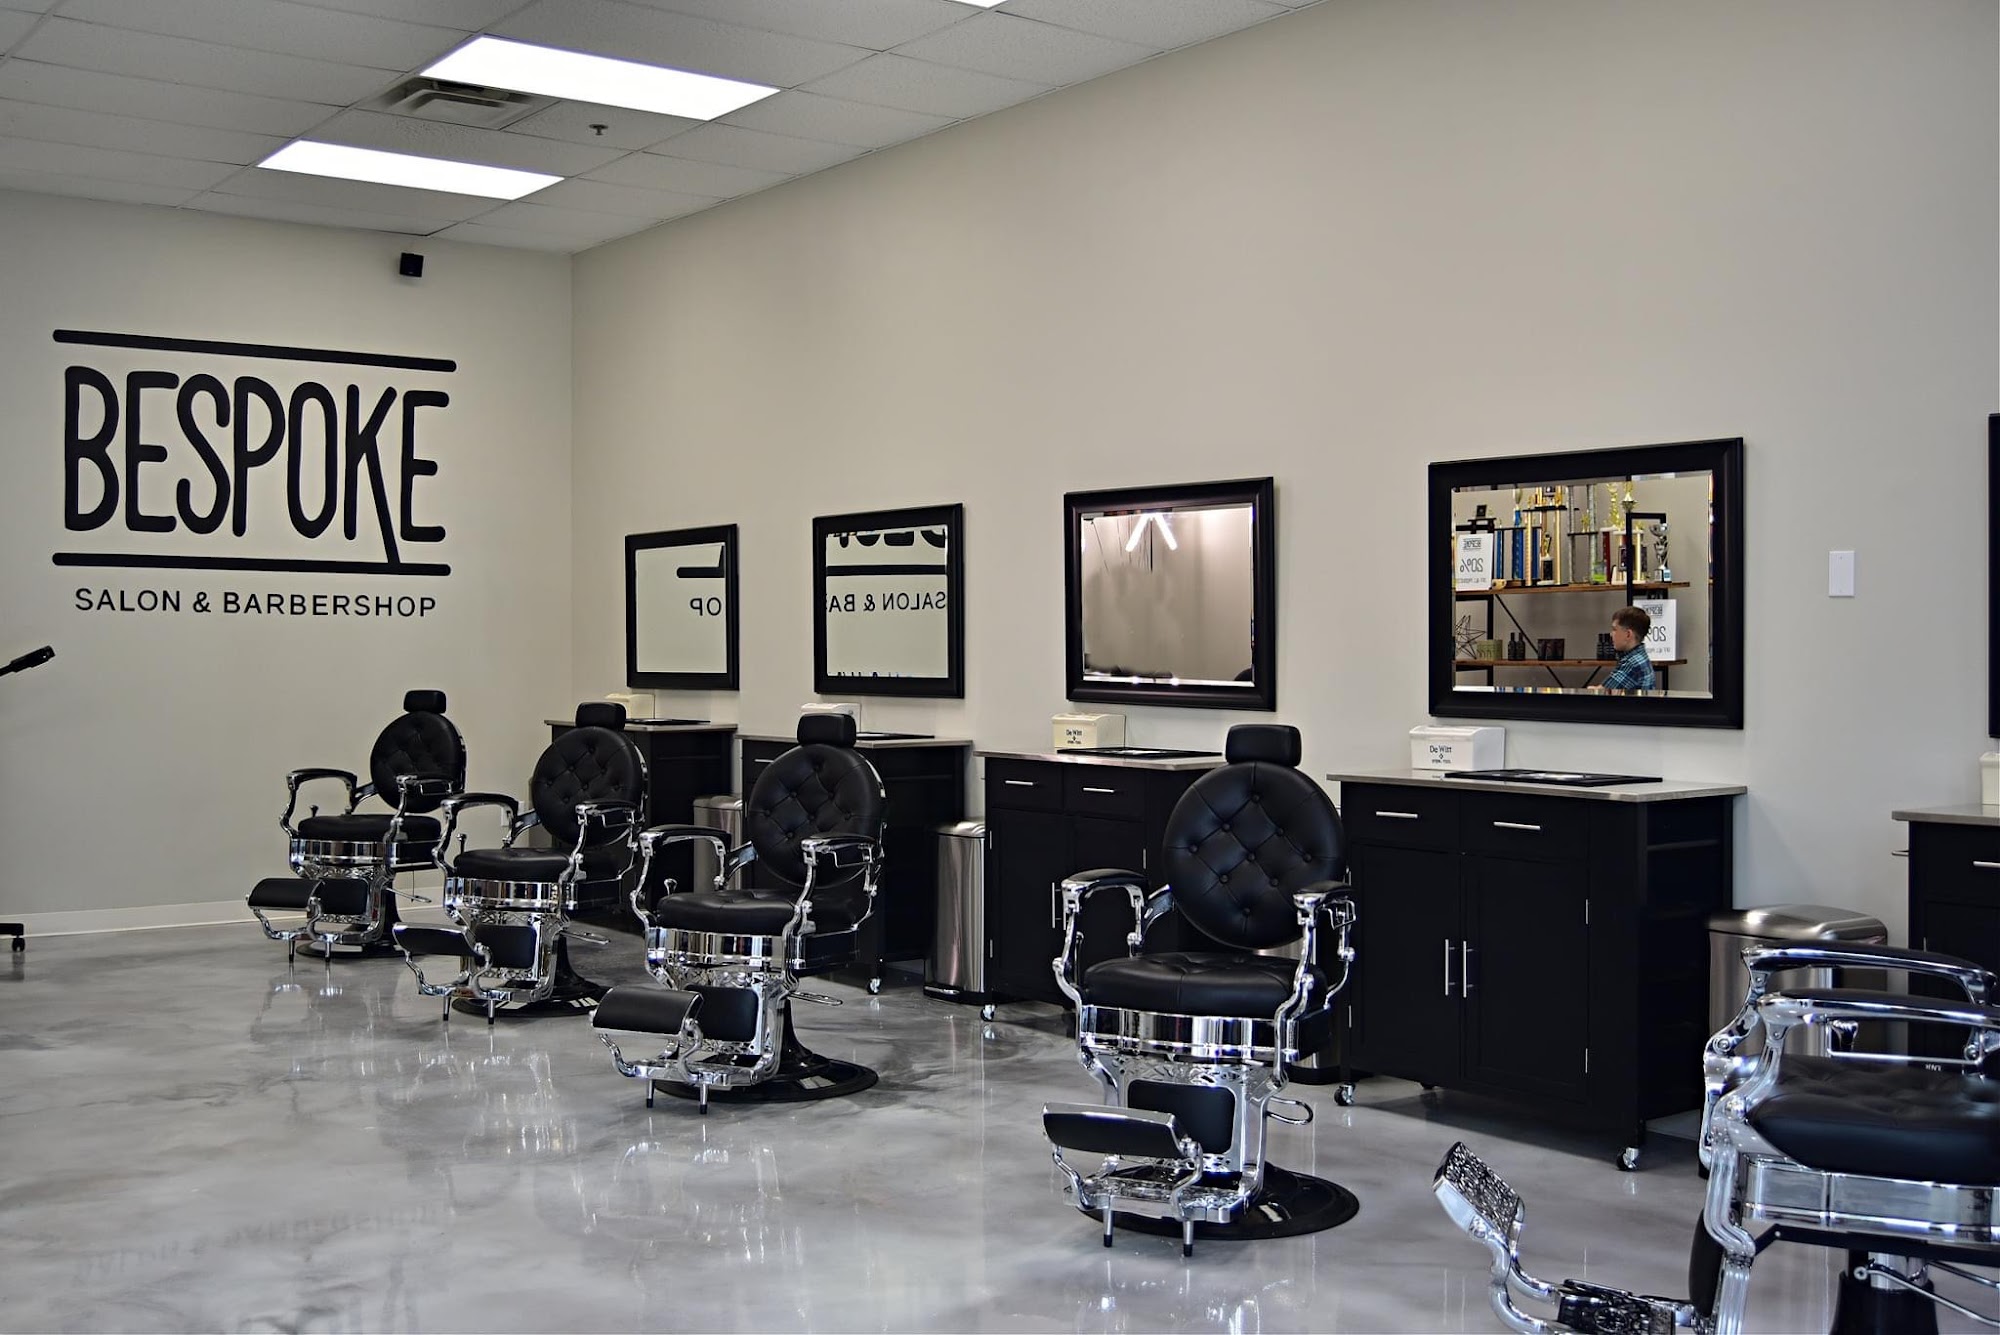 Bespoke Salon & Barbershop